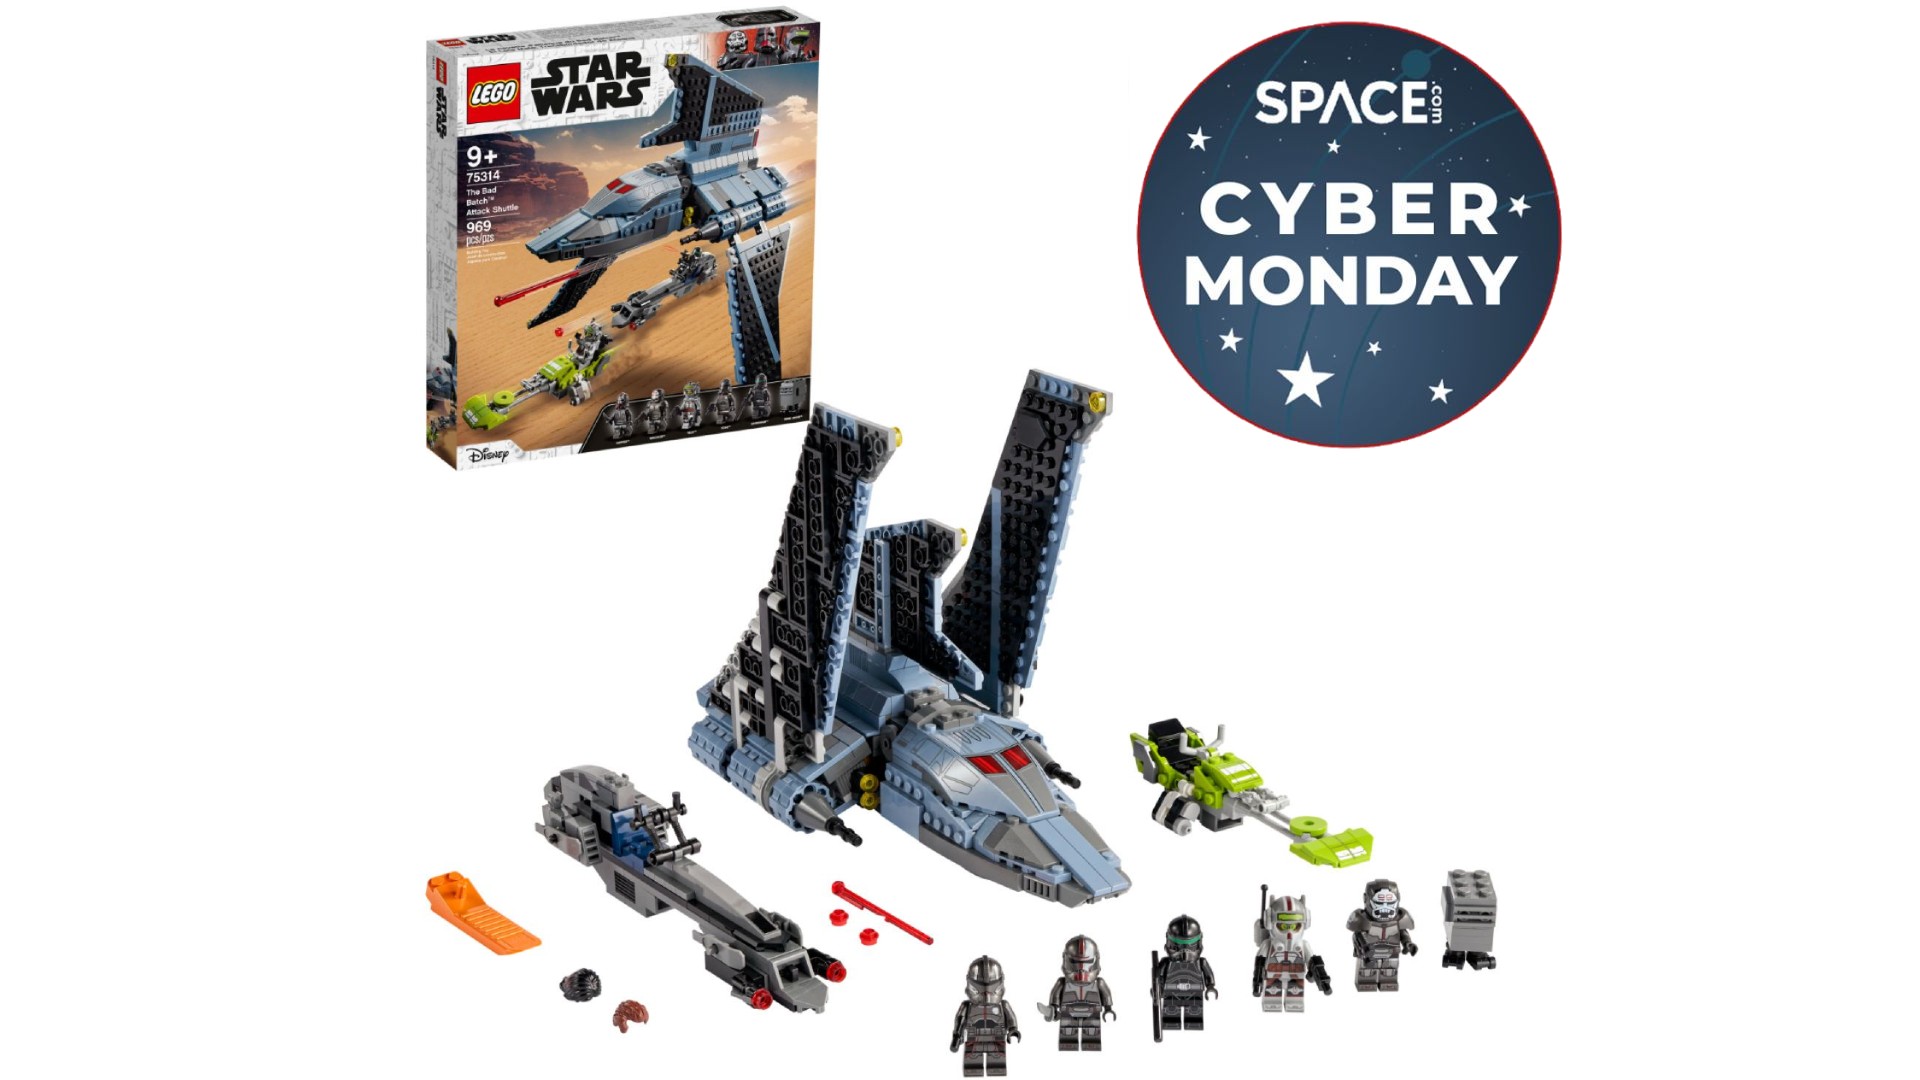 The Lego Star Wars Bad Batch Attack Shuttle